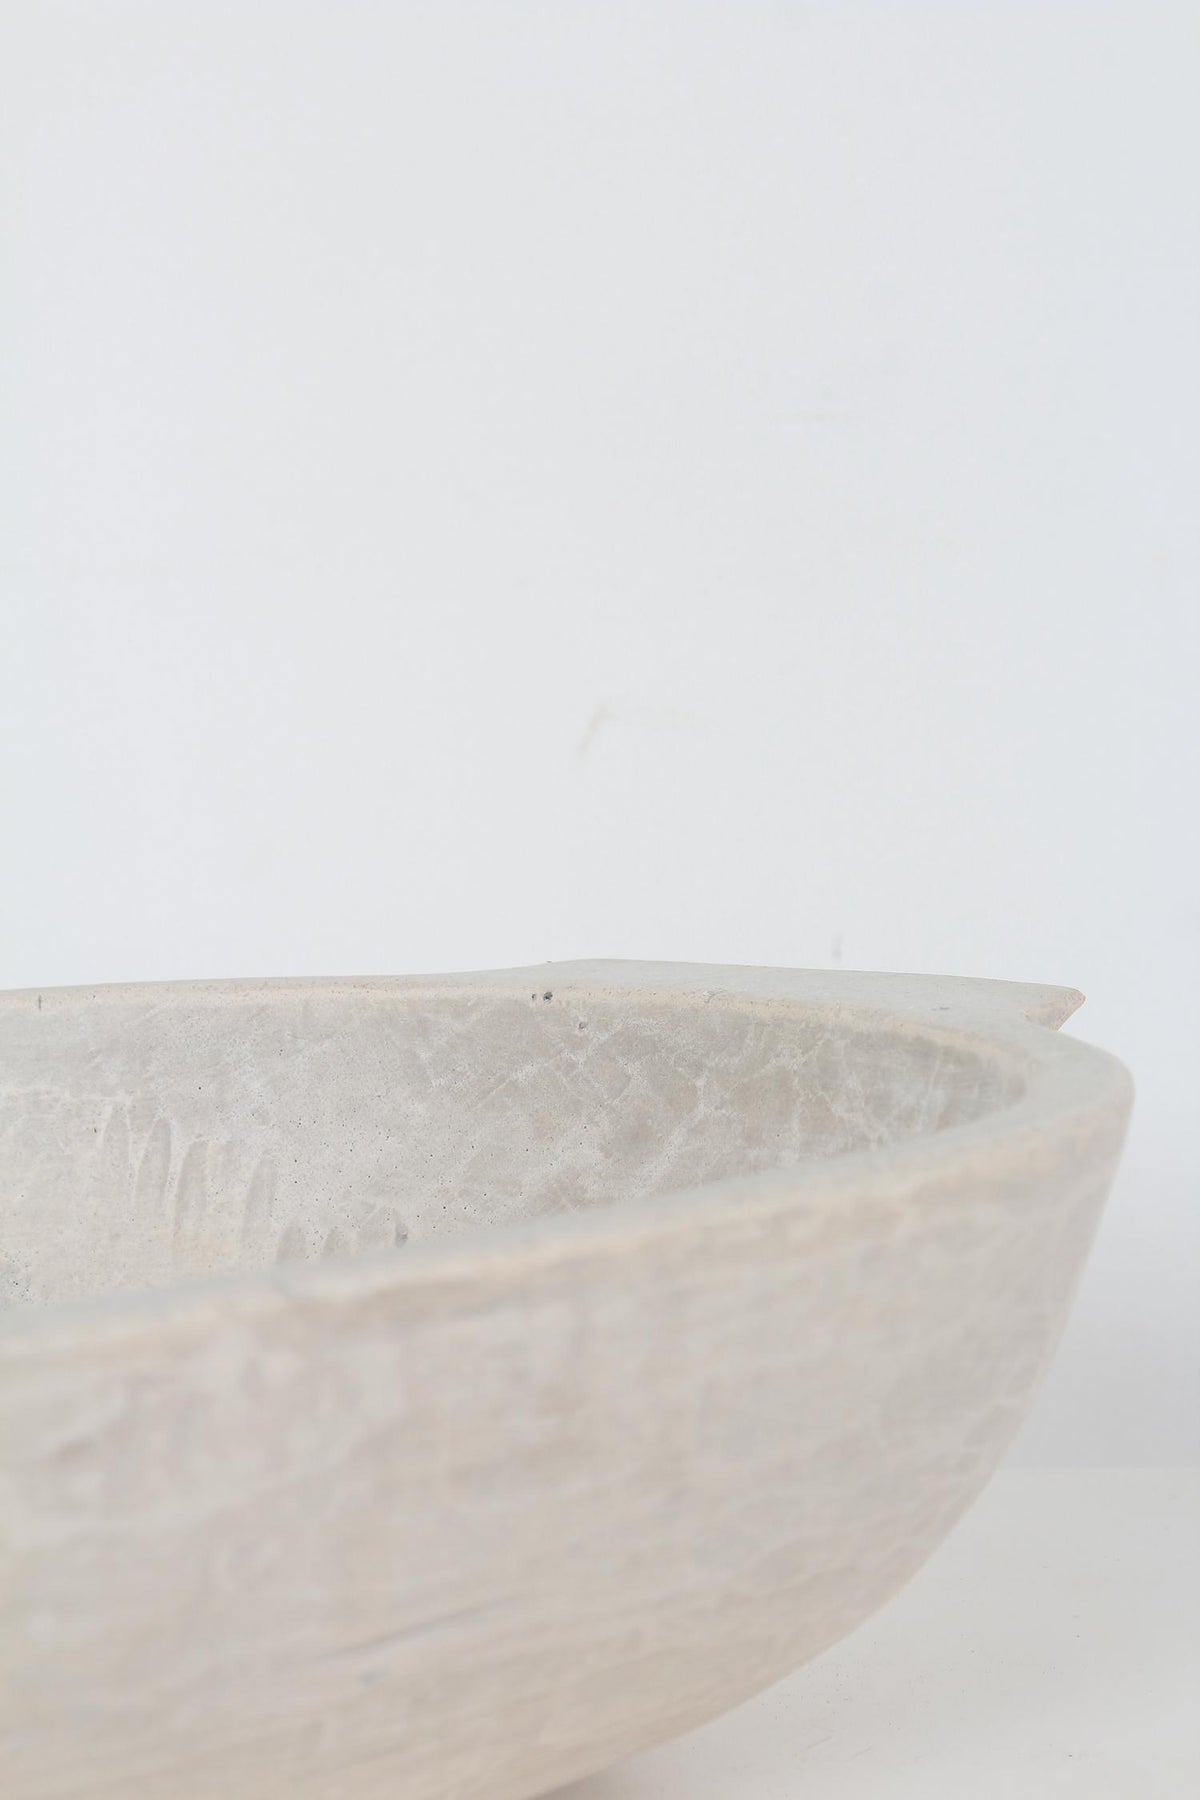 Contemporary Artisan Oolitic Limestone Bowl